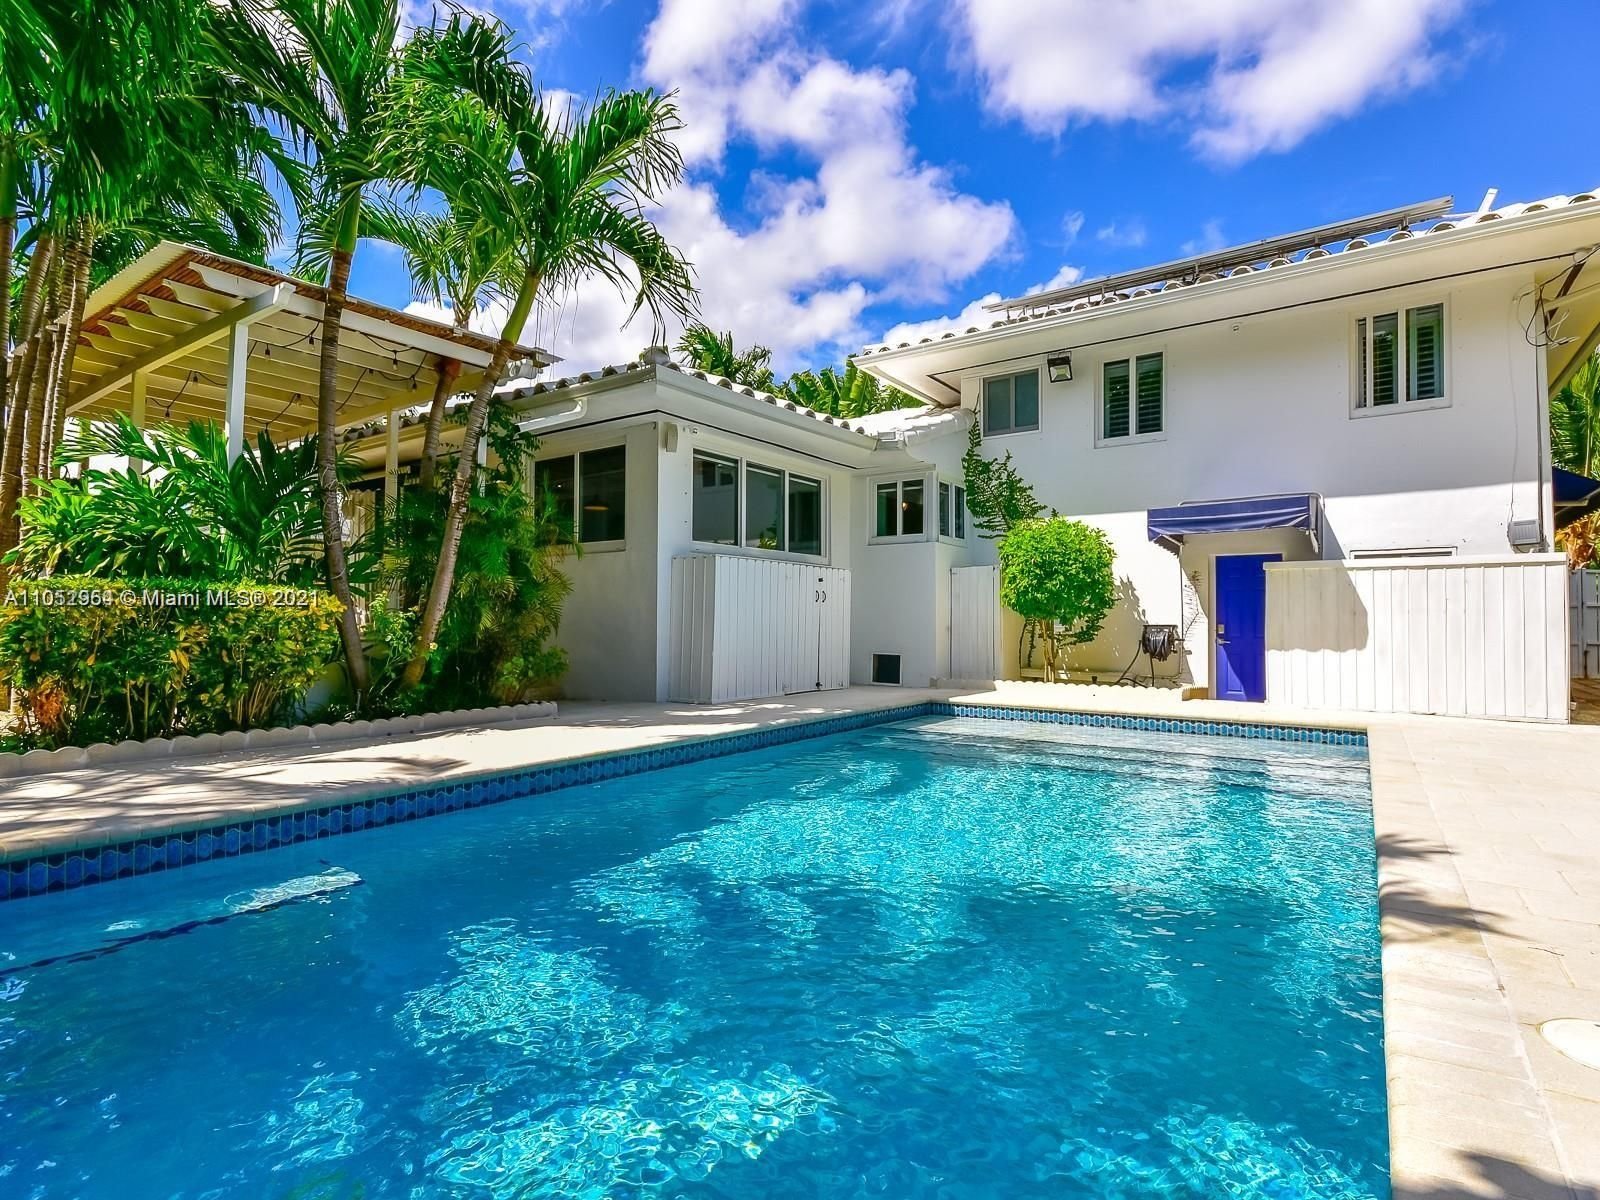 Real estate property located at 1164 86th St, Miami-Dade County, Miami, FL